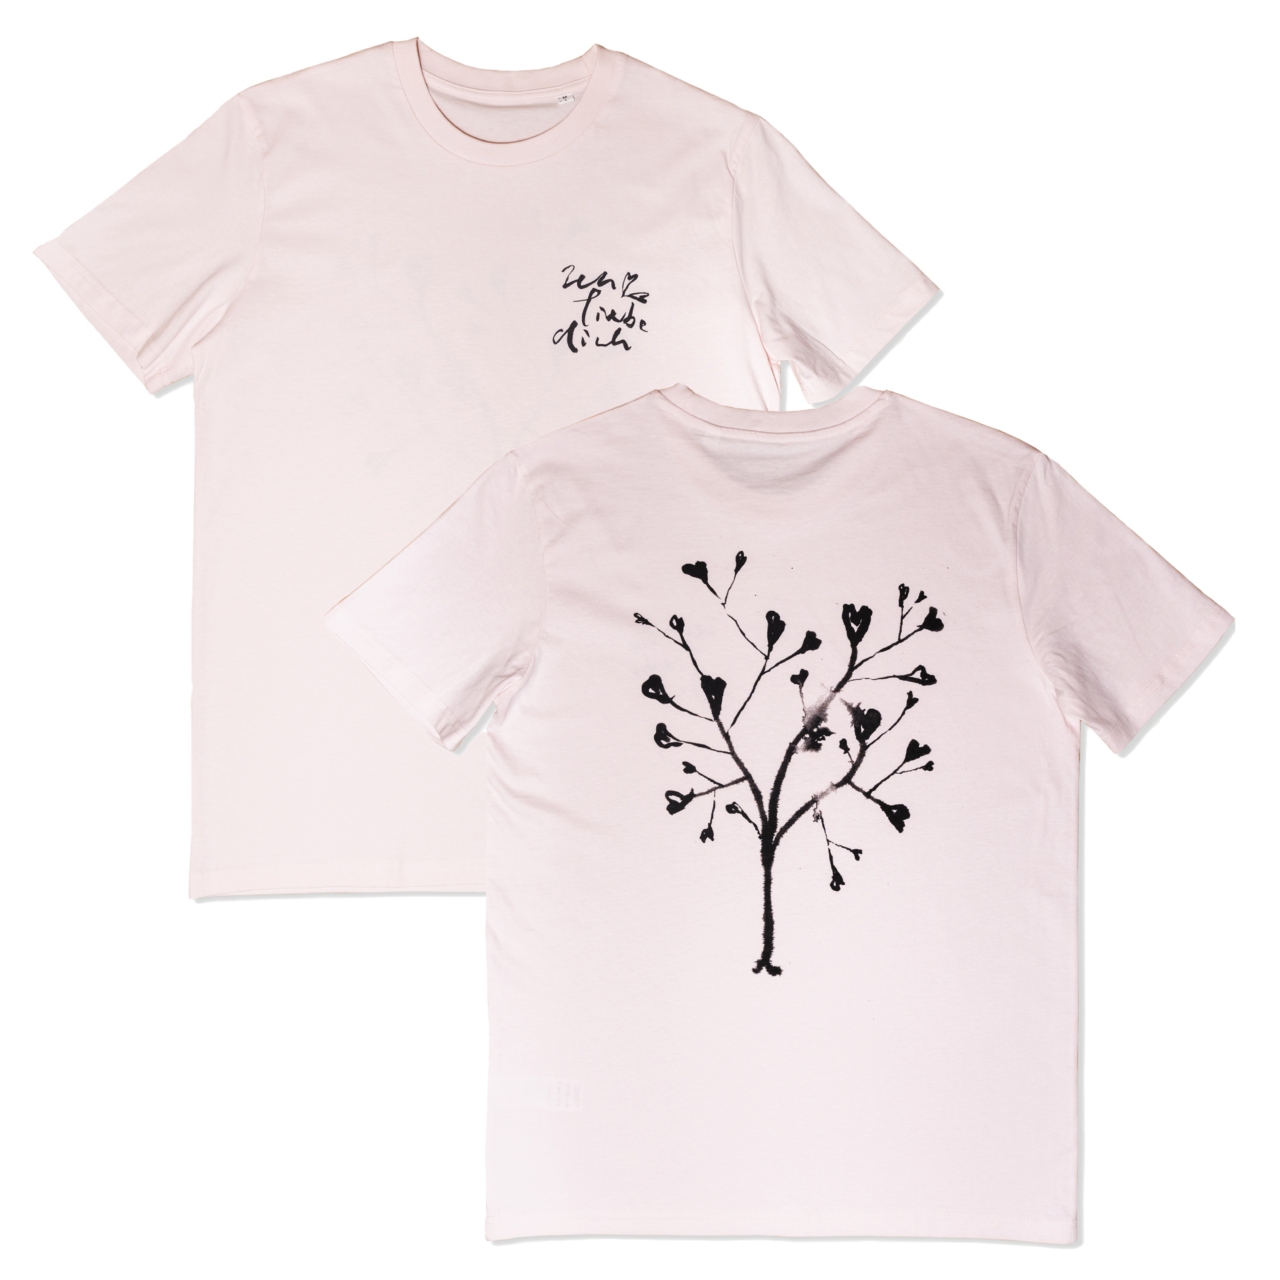 BRANDÃO FABER HUNGER - Pink Hearts Tree T-Shirt - XS, Candy Pink